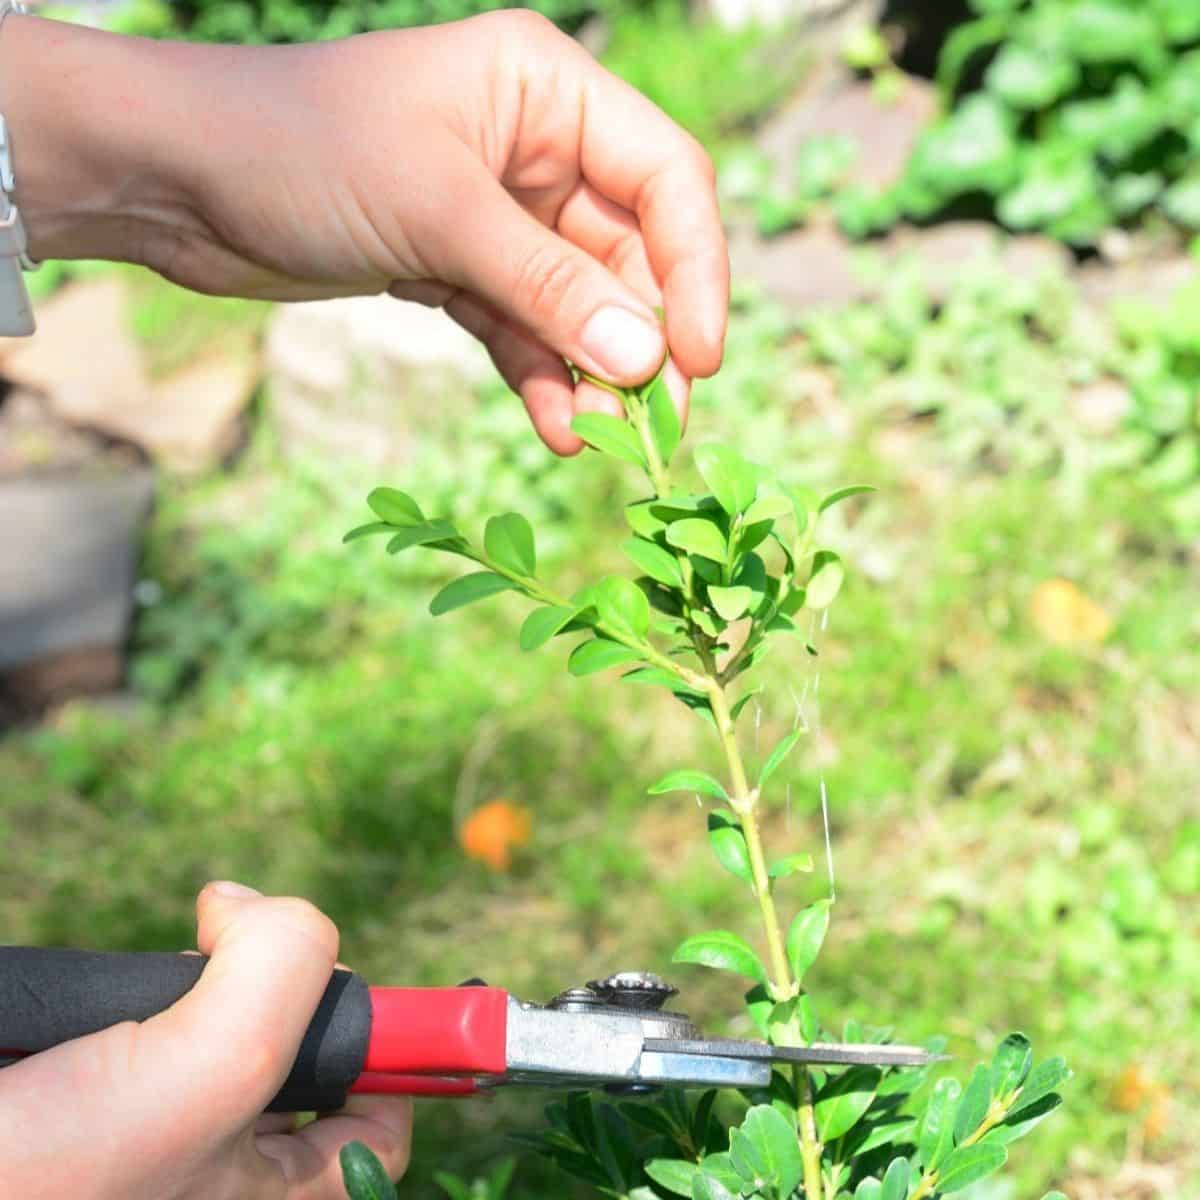 Hands with garden shears cutting elderberry stem.